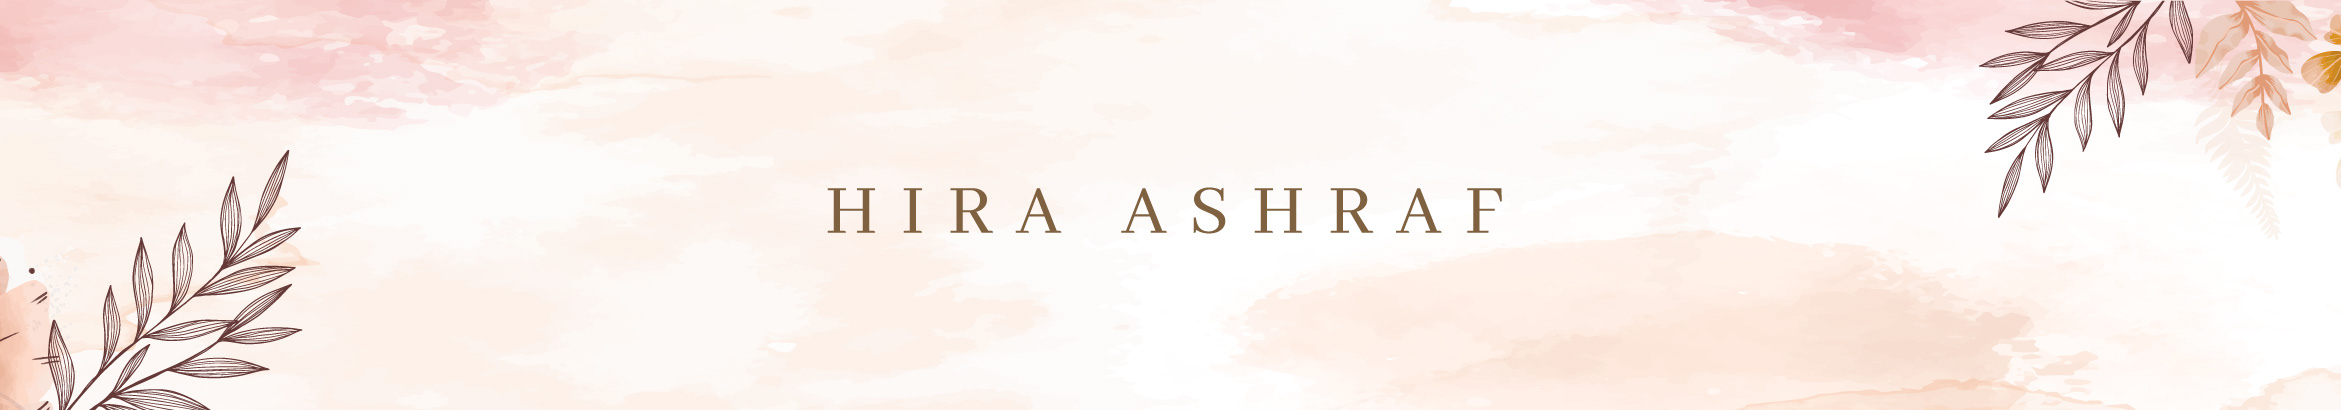 Hira Ashraf's profile banner